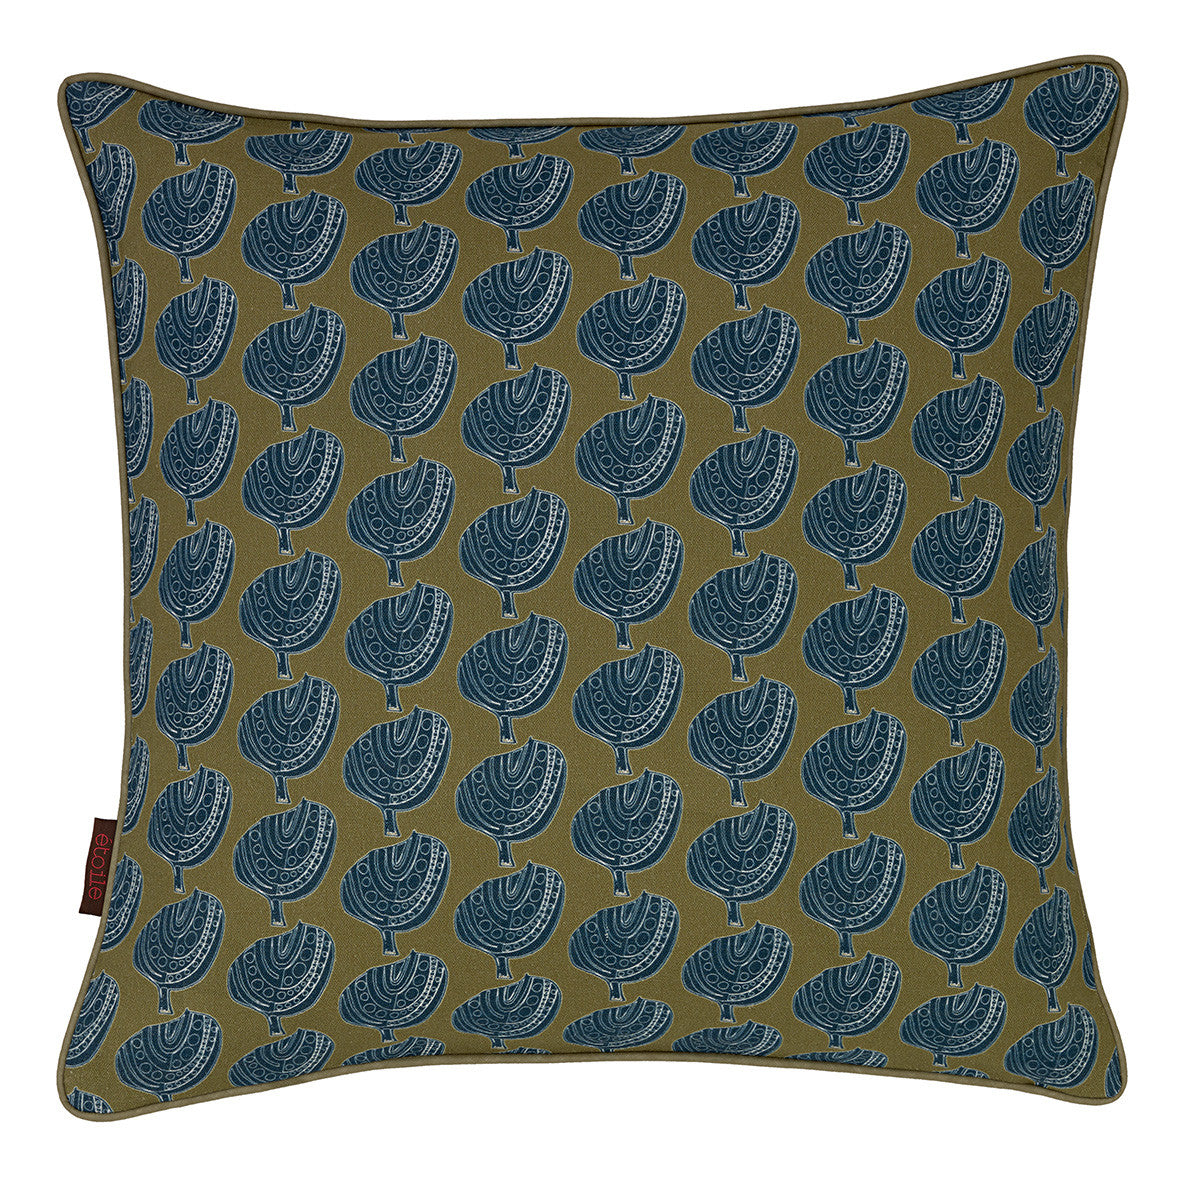 Graphic Apple Tree Pattern Printed Linen Union Decorative Throw Pillow in Antique Moss & Dark Petrol Blue 45x45cm